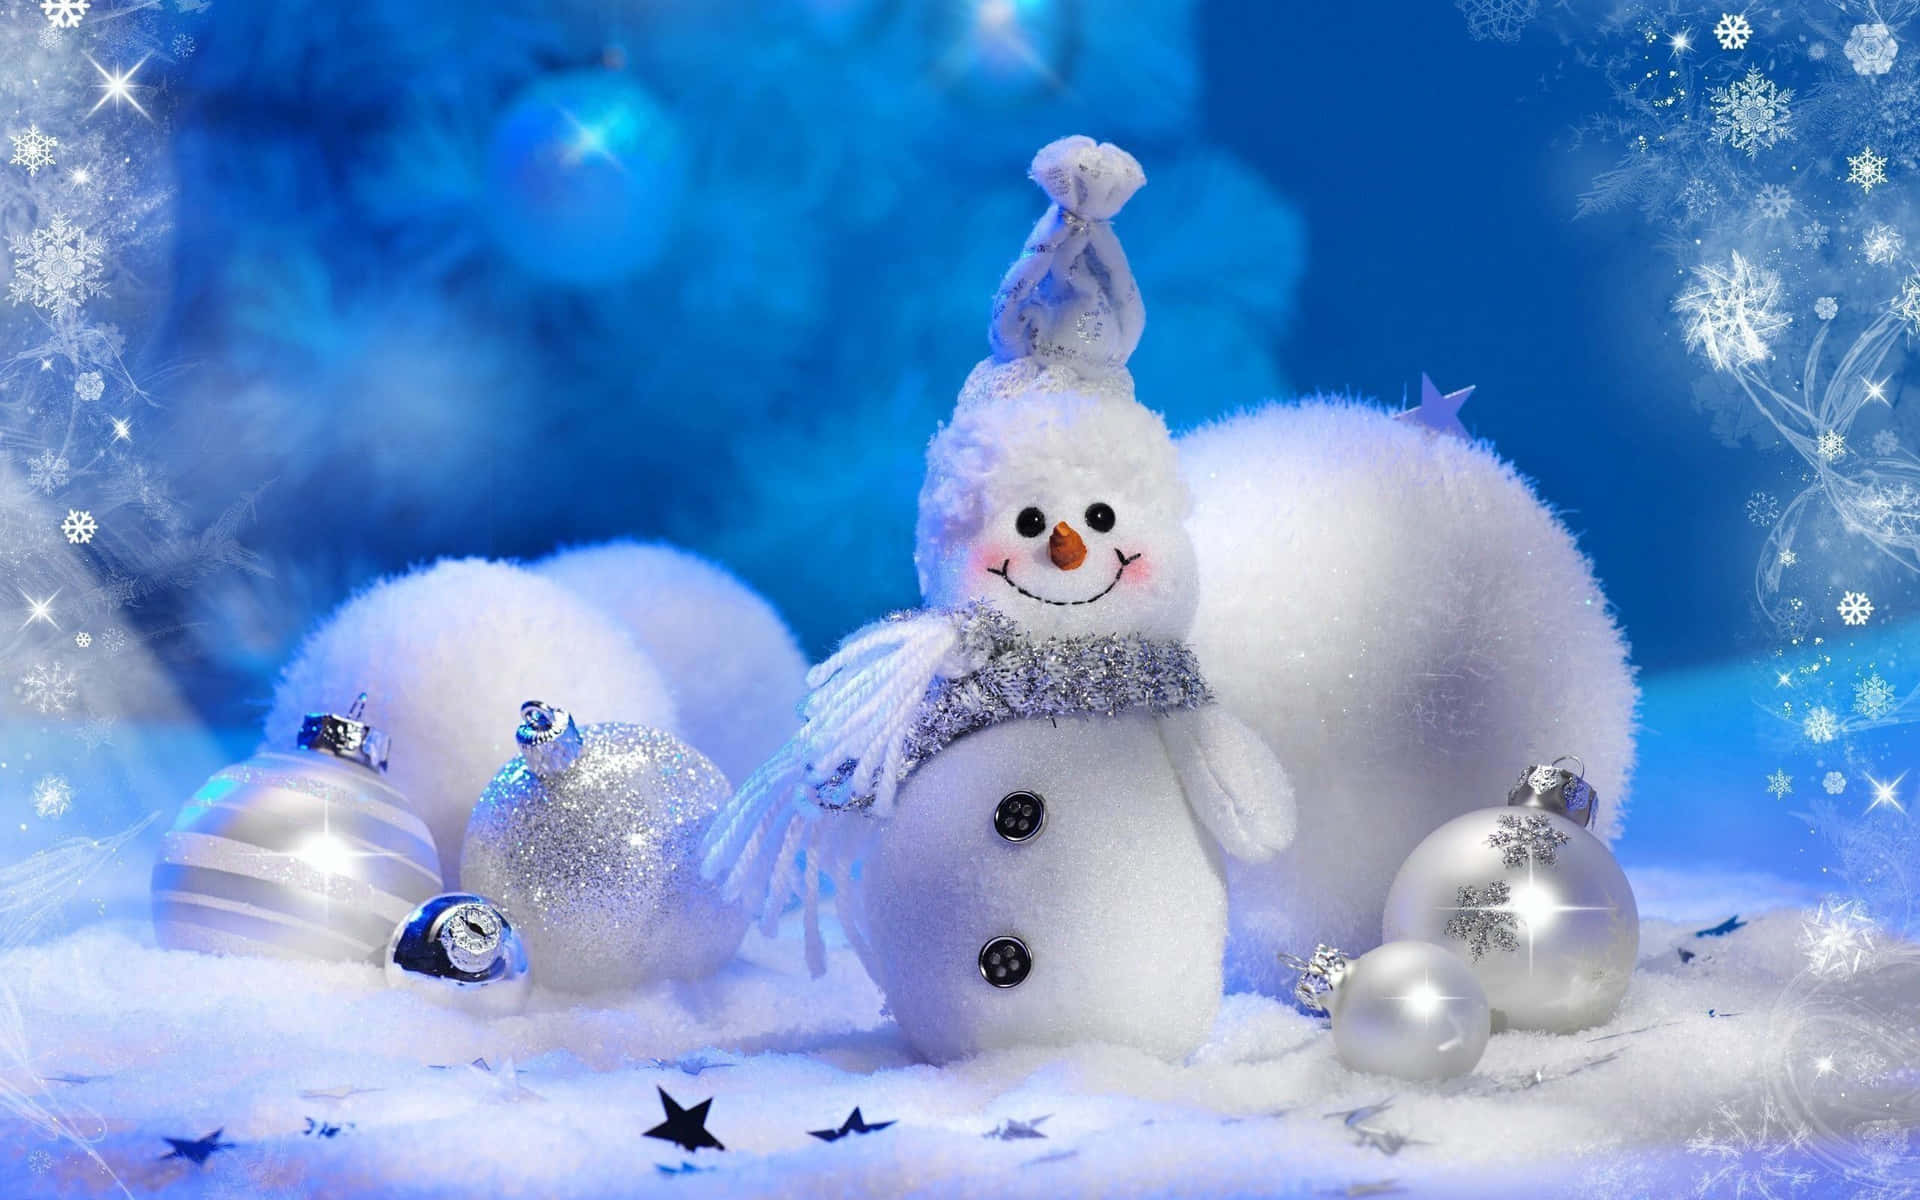 Celebrate a Festive Winter Wonderland with a Snowy Christmas